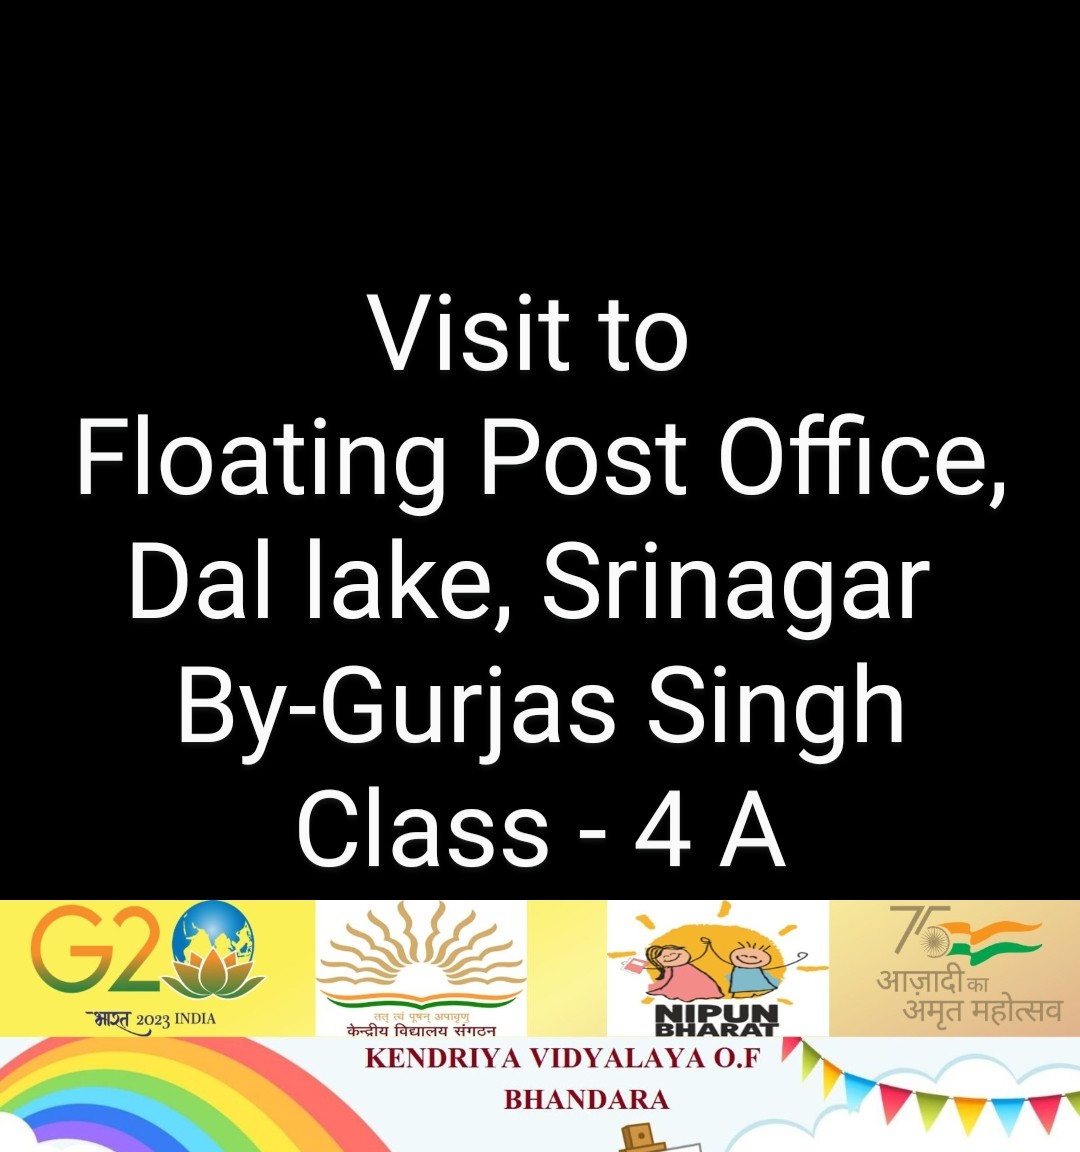 Exploring India, visit to floating post office at Dal lake @srinagar recorded by Master Gurjas singh of 4 A, KV OF BHANDARA to celebrate G20 meet organised recently in Kashmir. @KVOFBHANDARA 
@KVS_HQ
@KvsMumbai 
#G20janbhagidari 
#ekbharat 
#India
#kvs